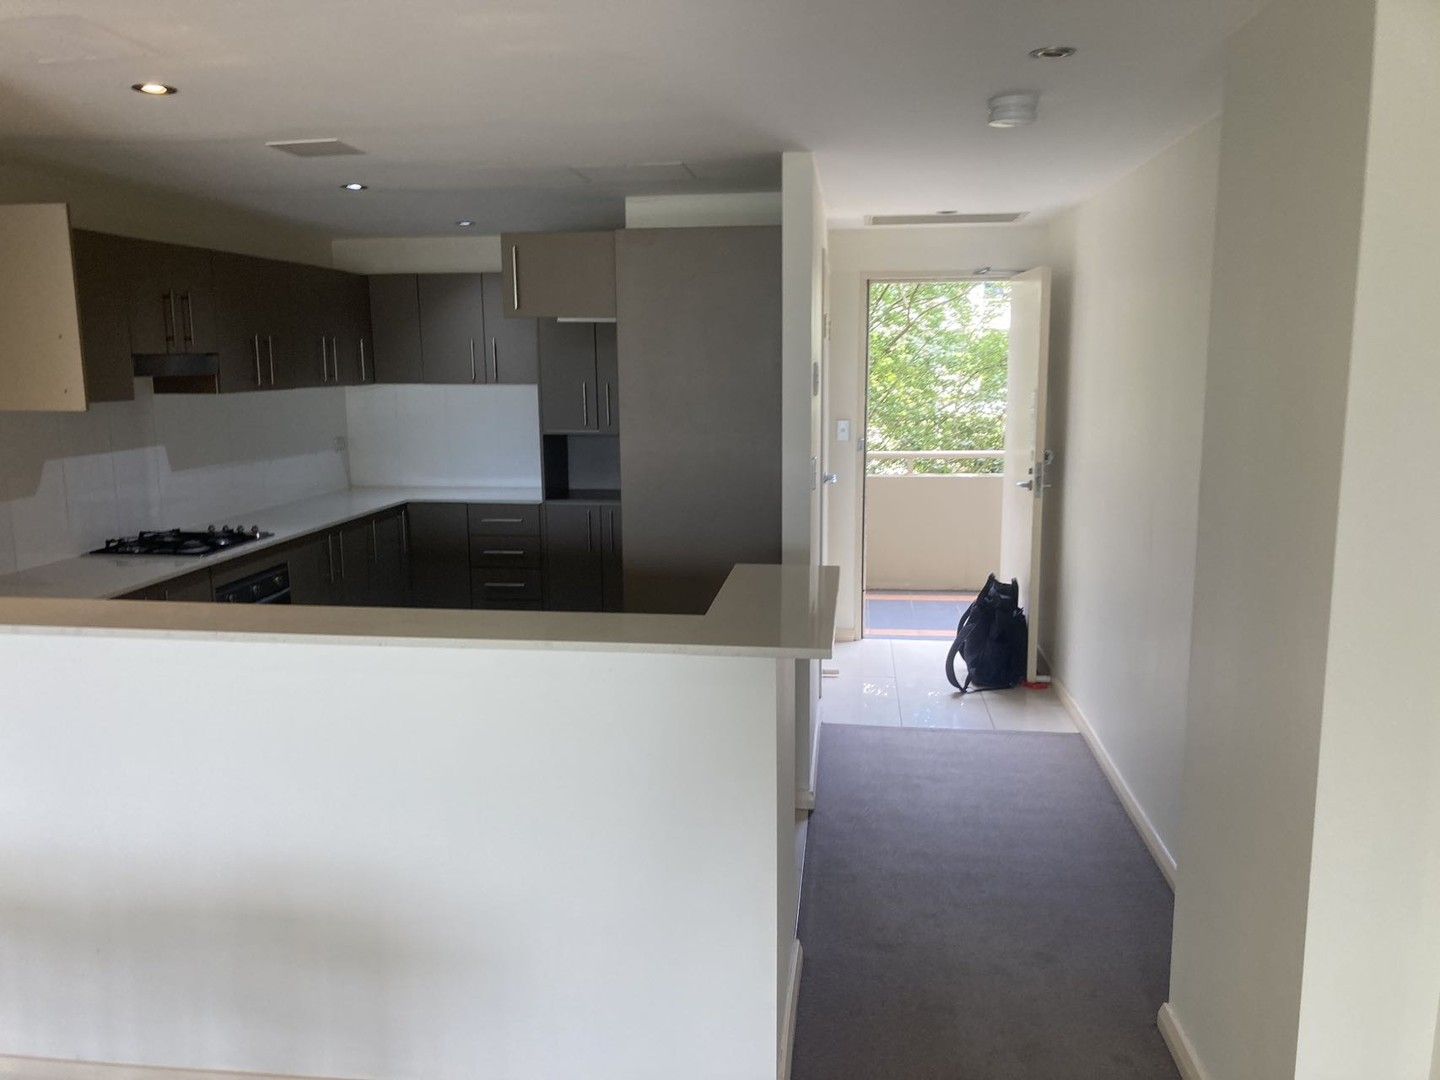 2 bedrooms Apartment / Unit / Flat in 109-123 ORiordan st MASCOT NSW, 2020